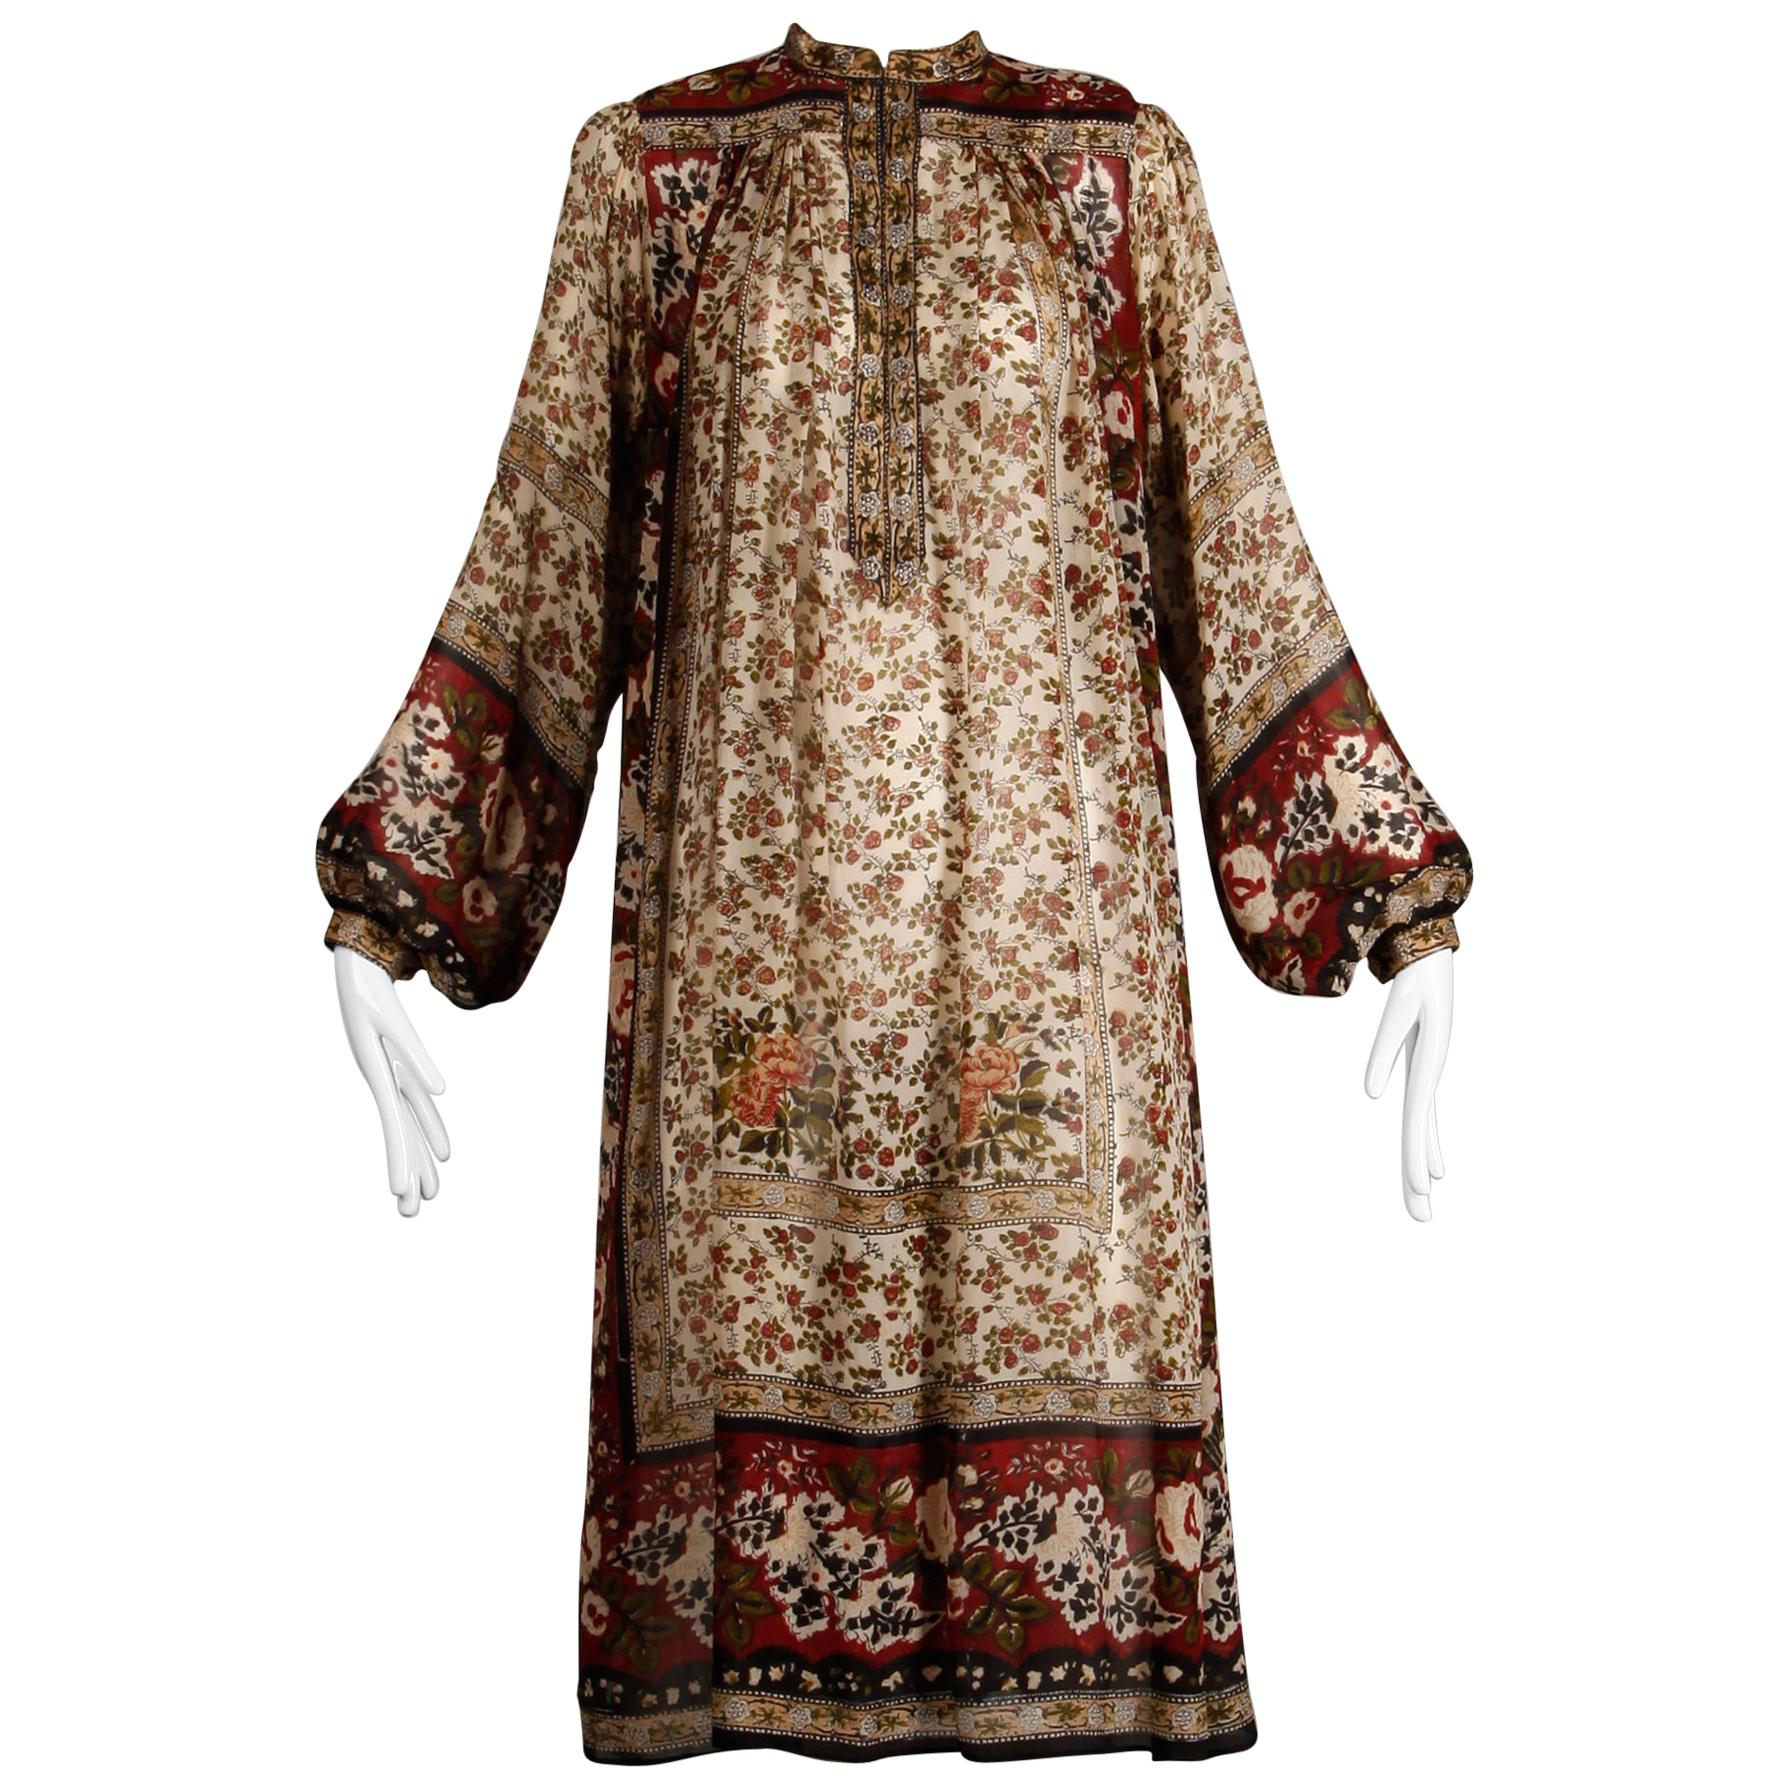 Ritu Kumar for Judith Ann 1970s Vintage 100% Silk Indian Hand-Block Print Dress